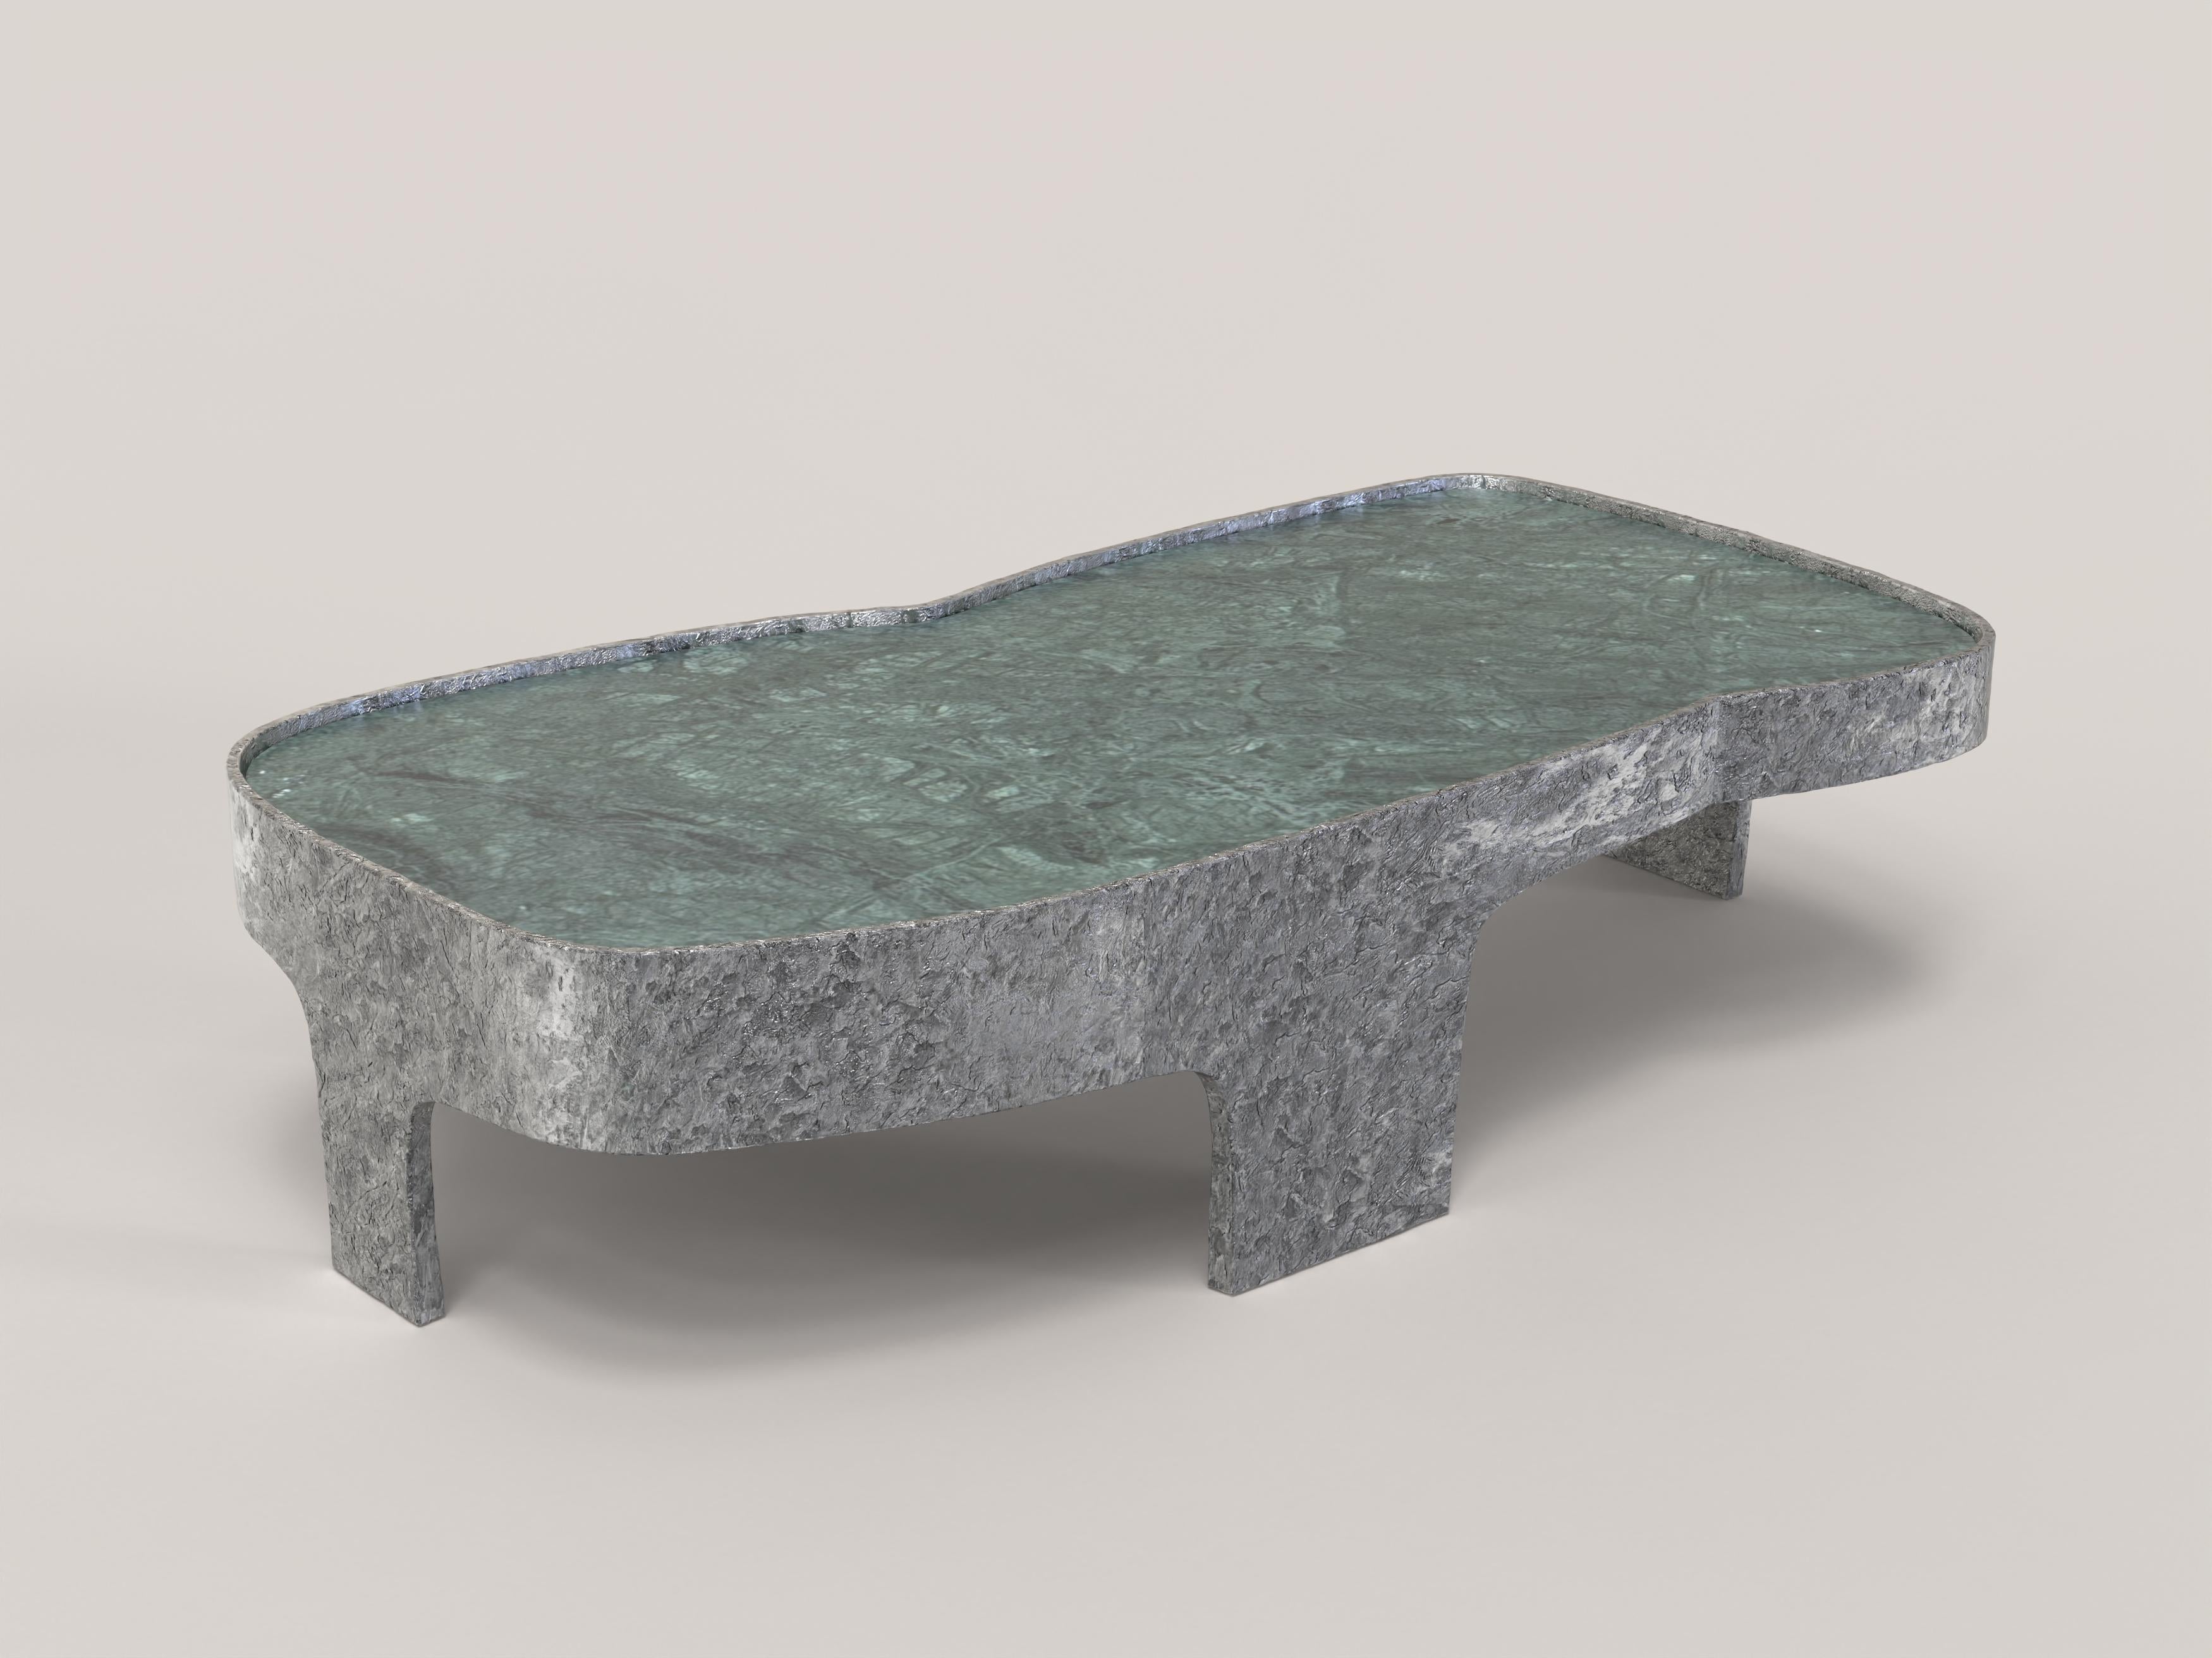 Limited Edition Marble Aluminium Table, Sumatra V3 by Edizione Limitata In New Condition For Sale In Milano, IT